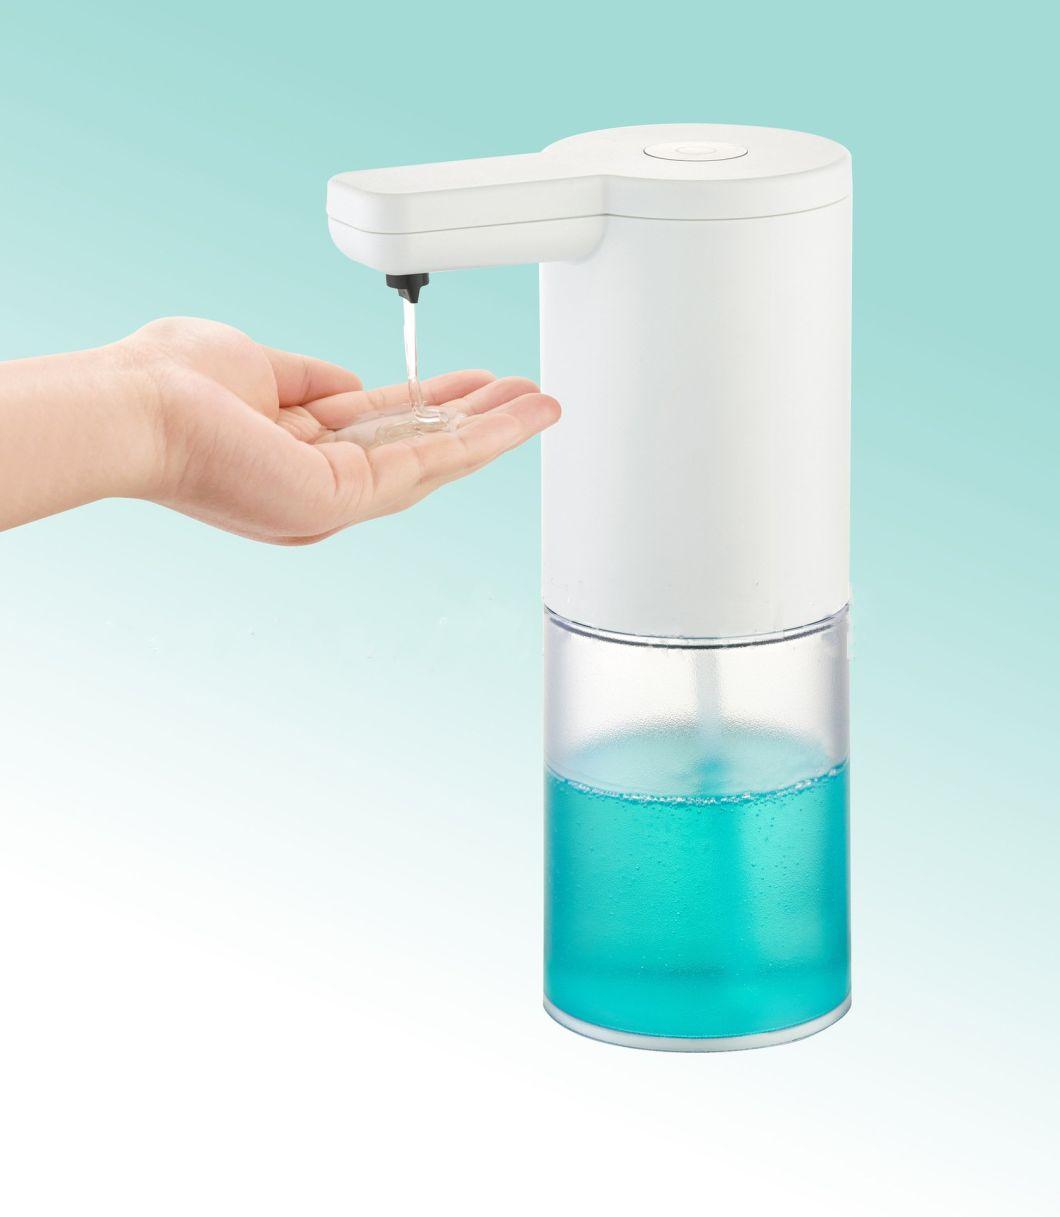 Wholesale Sensor Hands Free Sanitizer Liquid Electric Foam Smart Spray Alcohol Foam Gel Automatic Sensor Soap Dispenser Infrared Electric